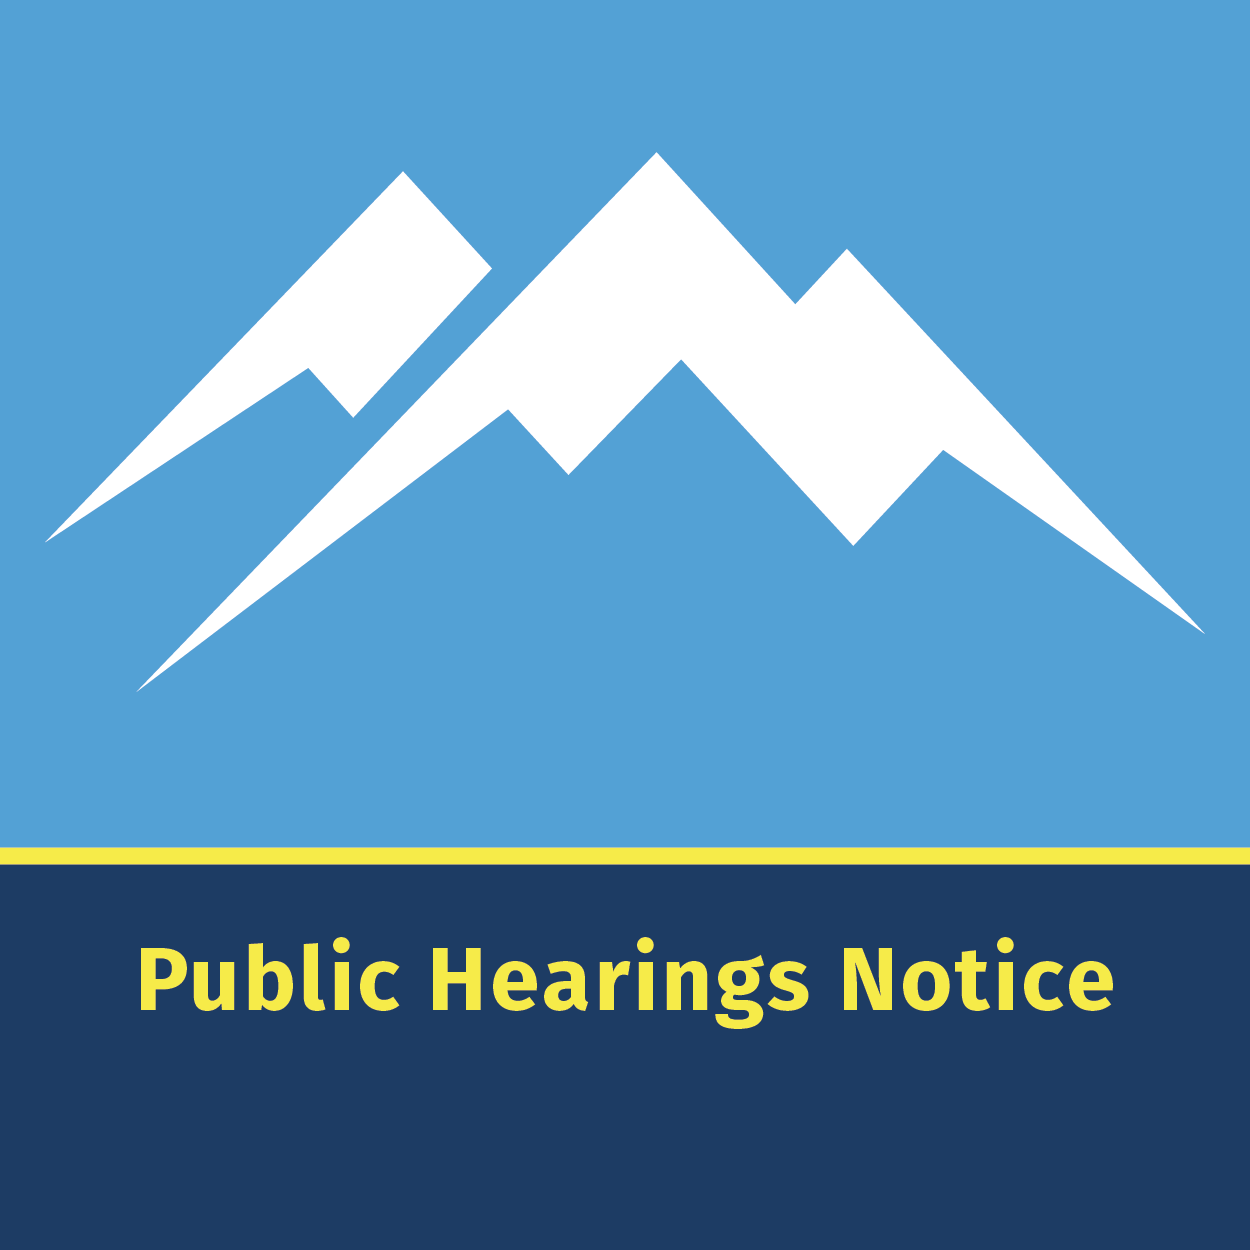 Public Hearings Notice